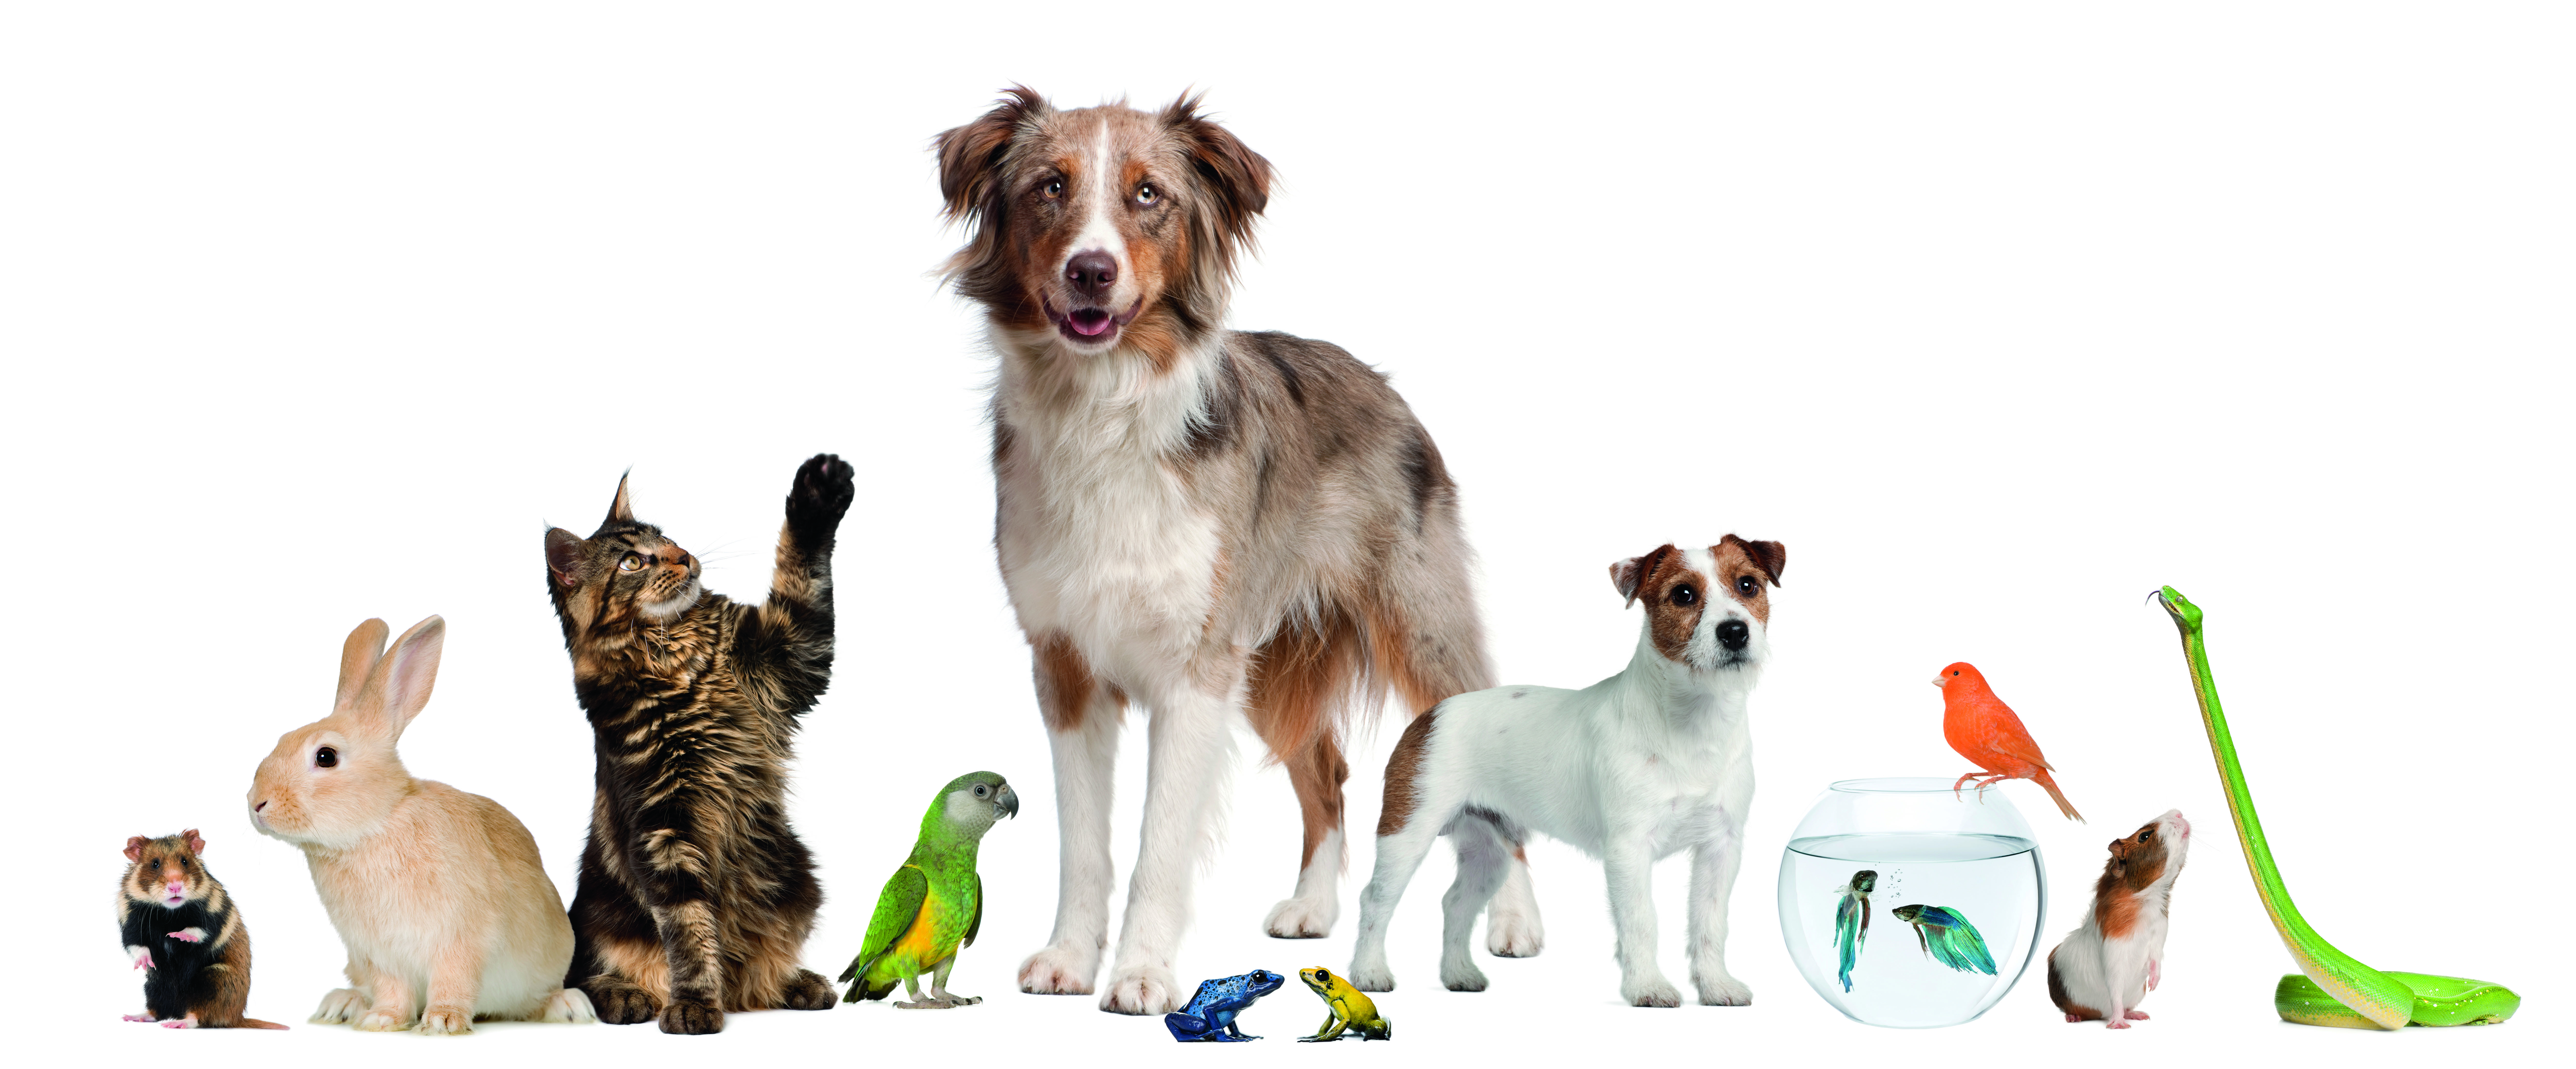 How to start a pet business - Dogslife. Dog Breeds Magazine